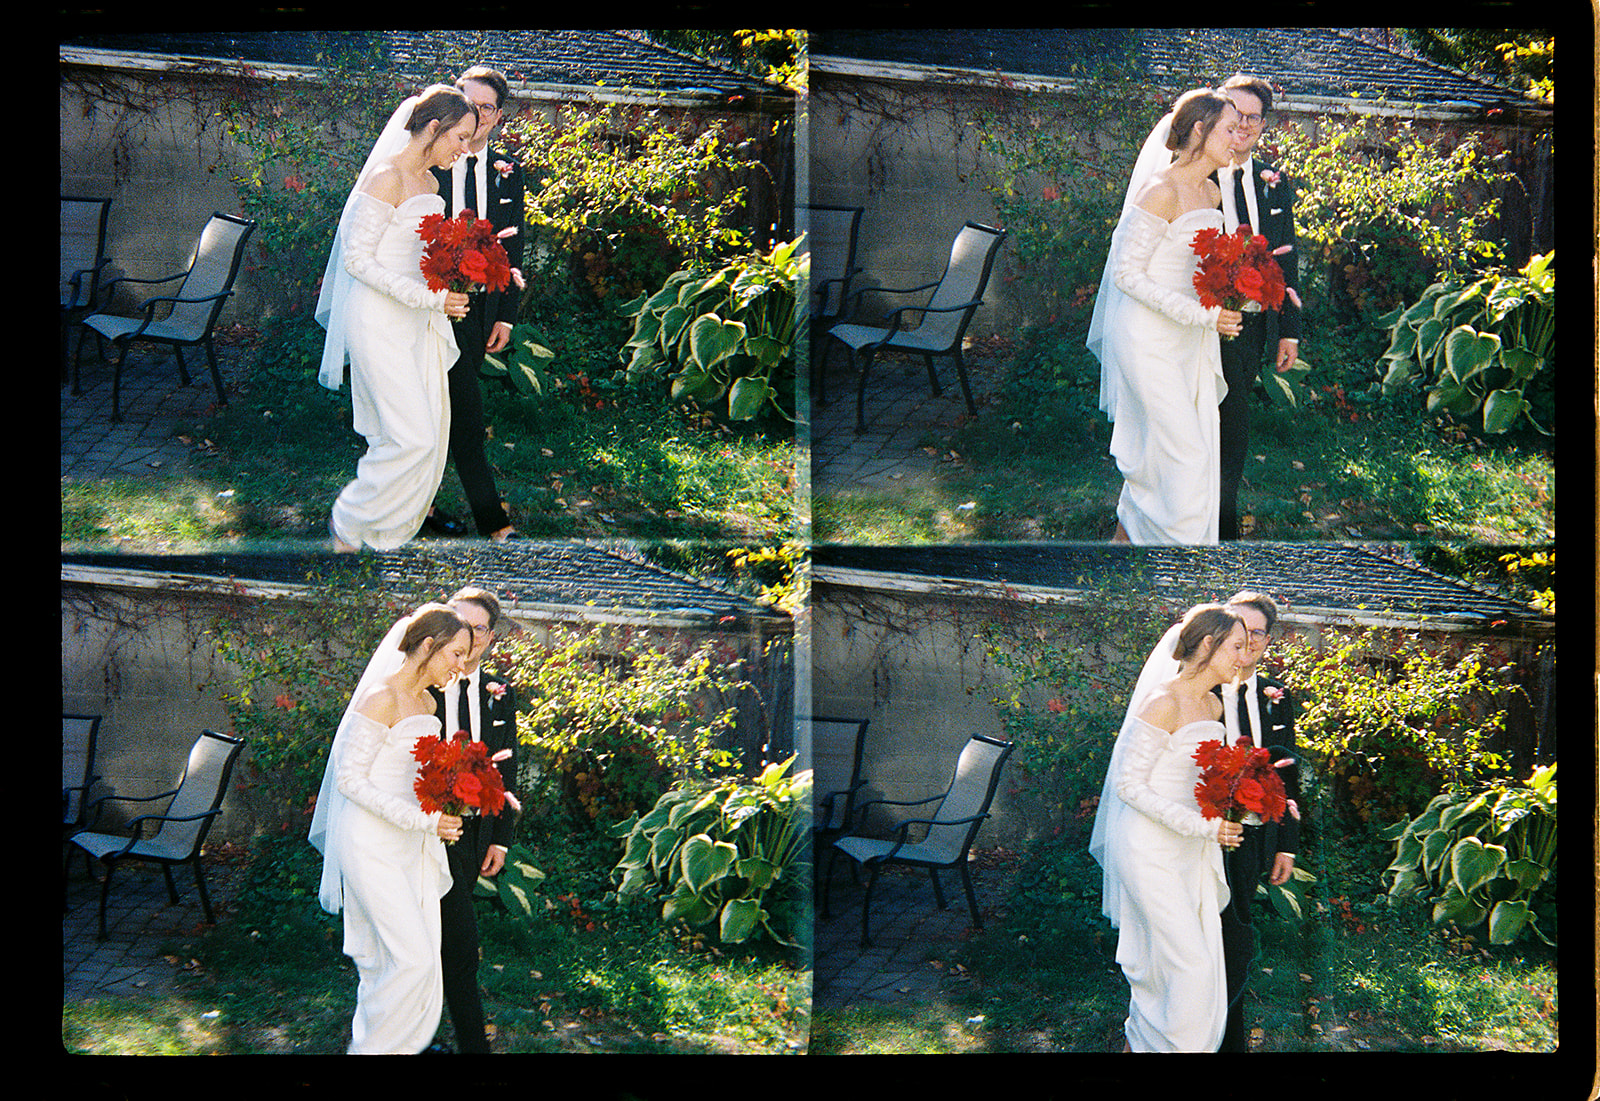 Kadri Karmo film photographer. An intimate wedding in Cambridge, MA.